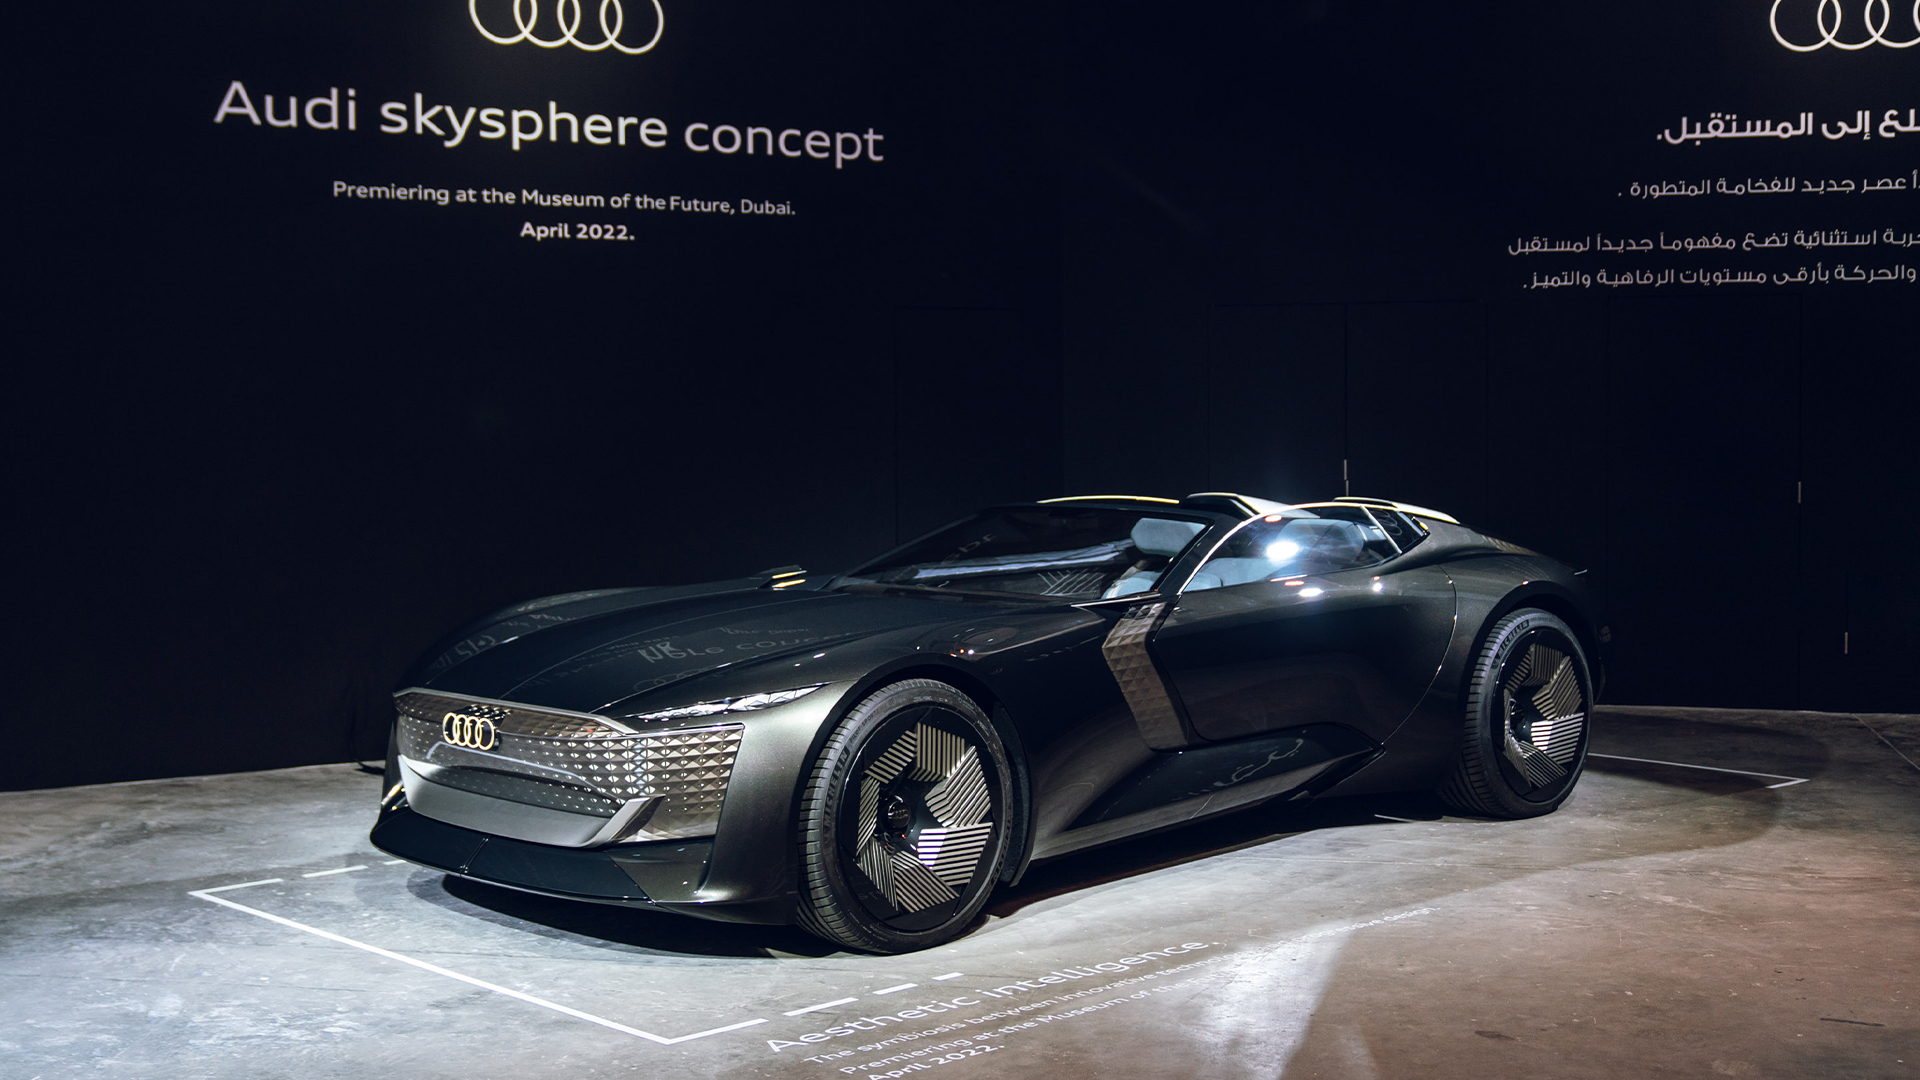 De Audi skysphere concept in het Museum of the Future, Dubai.